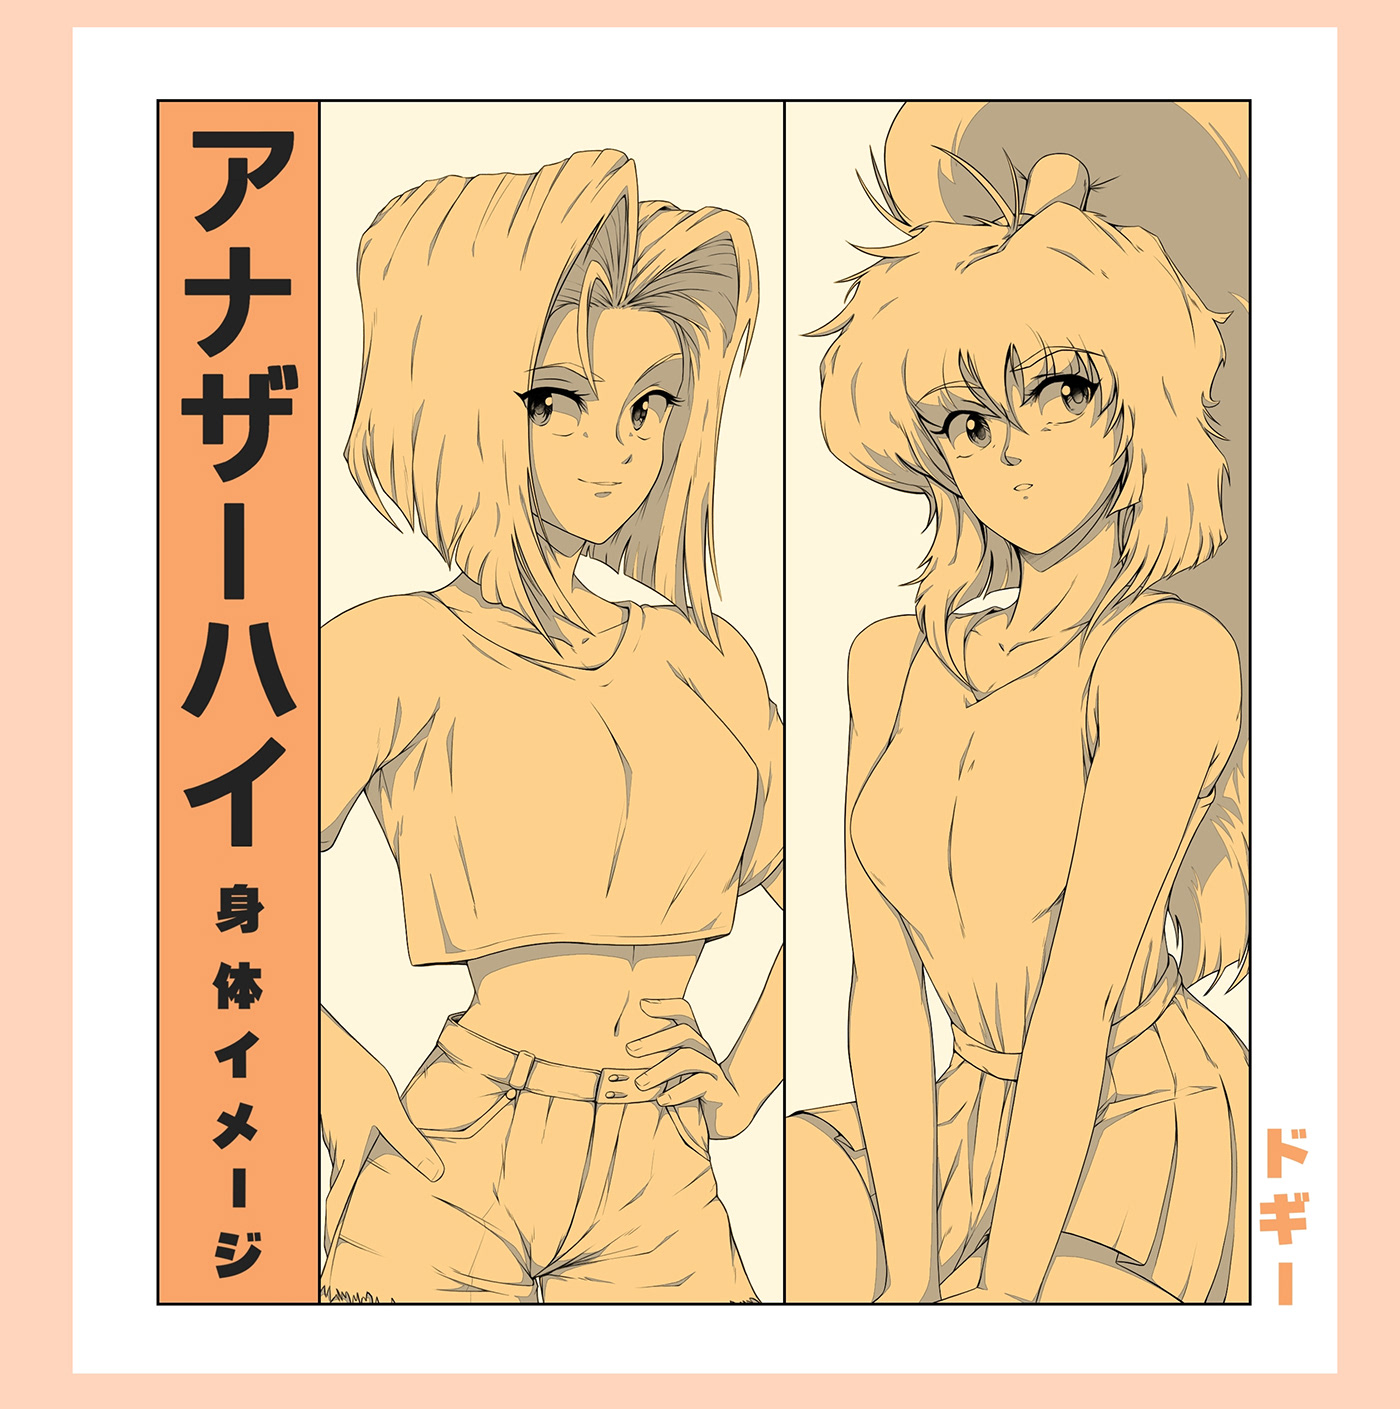 80s anime cartoon concept art digital illustration manga orange poster Poster Design print